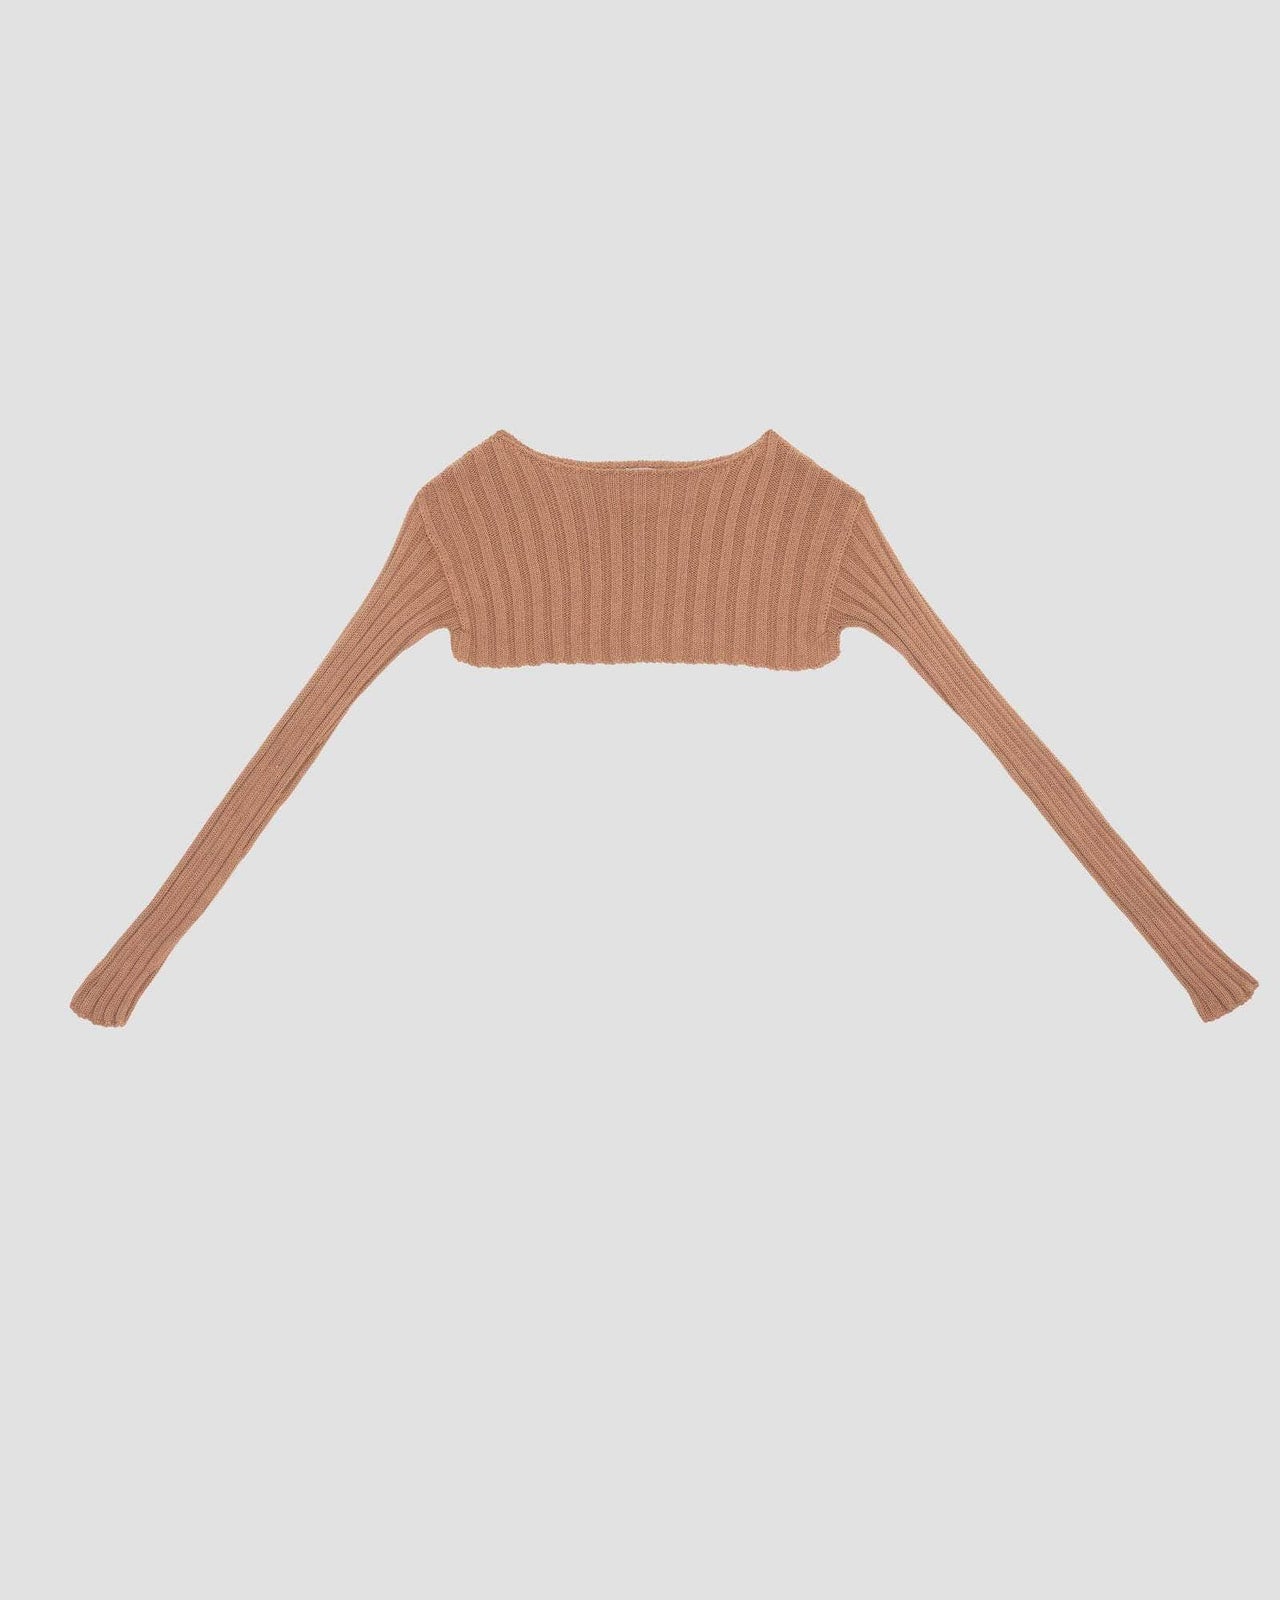 Macau Sleeve Sweater in assortment | Organic cotton knit | en 